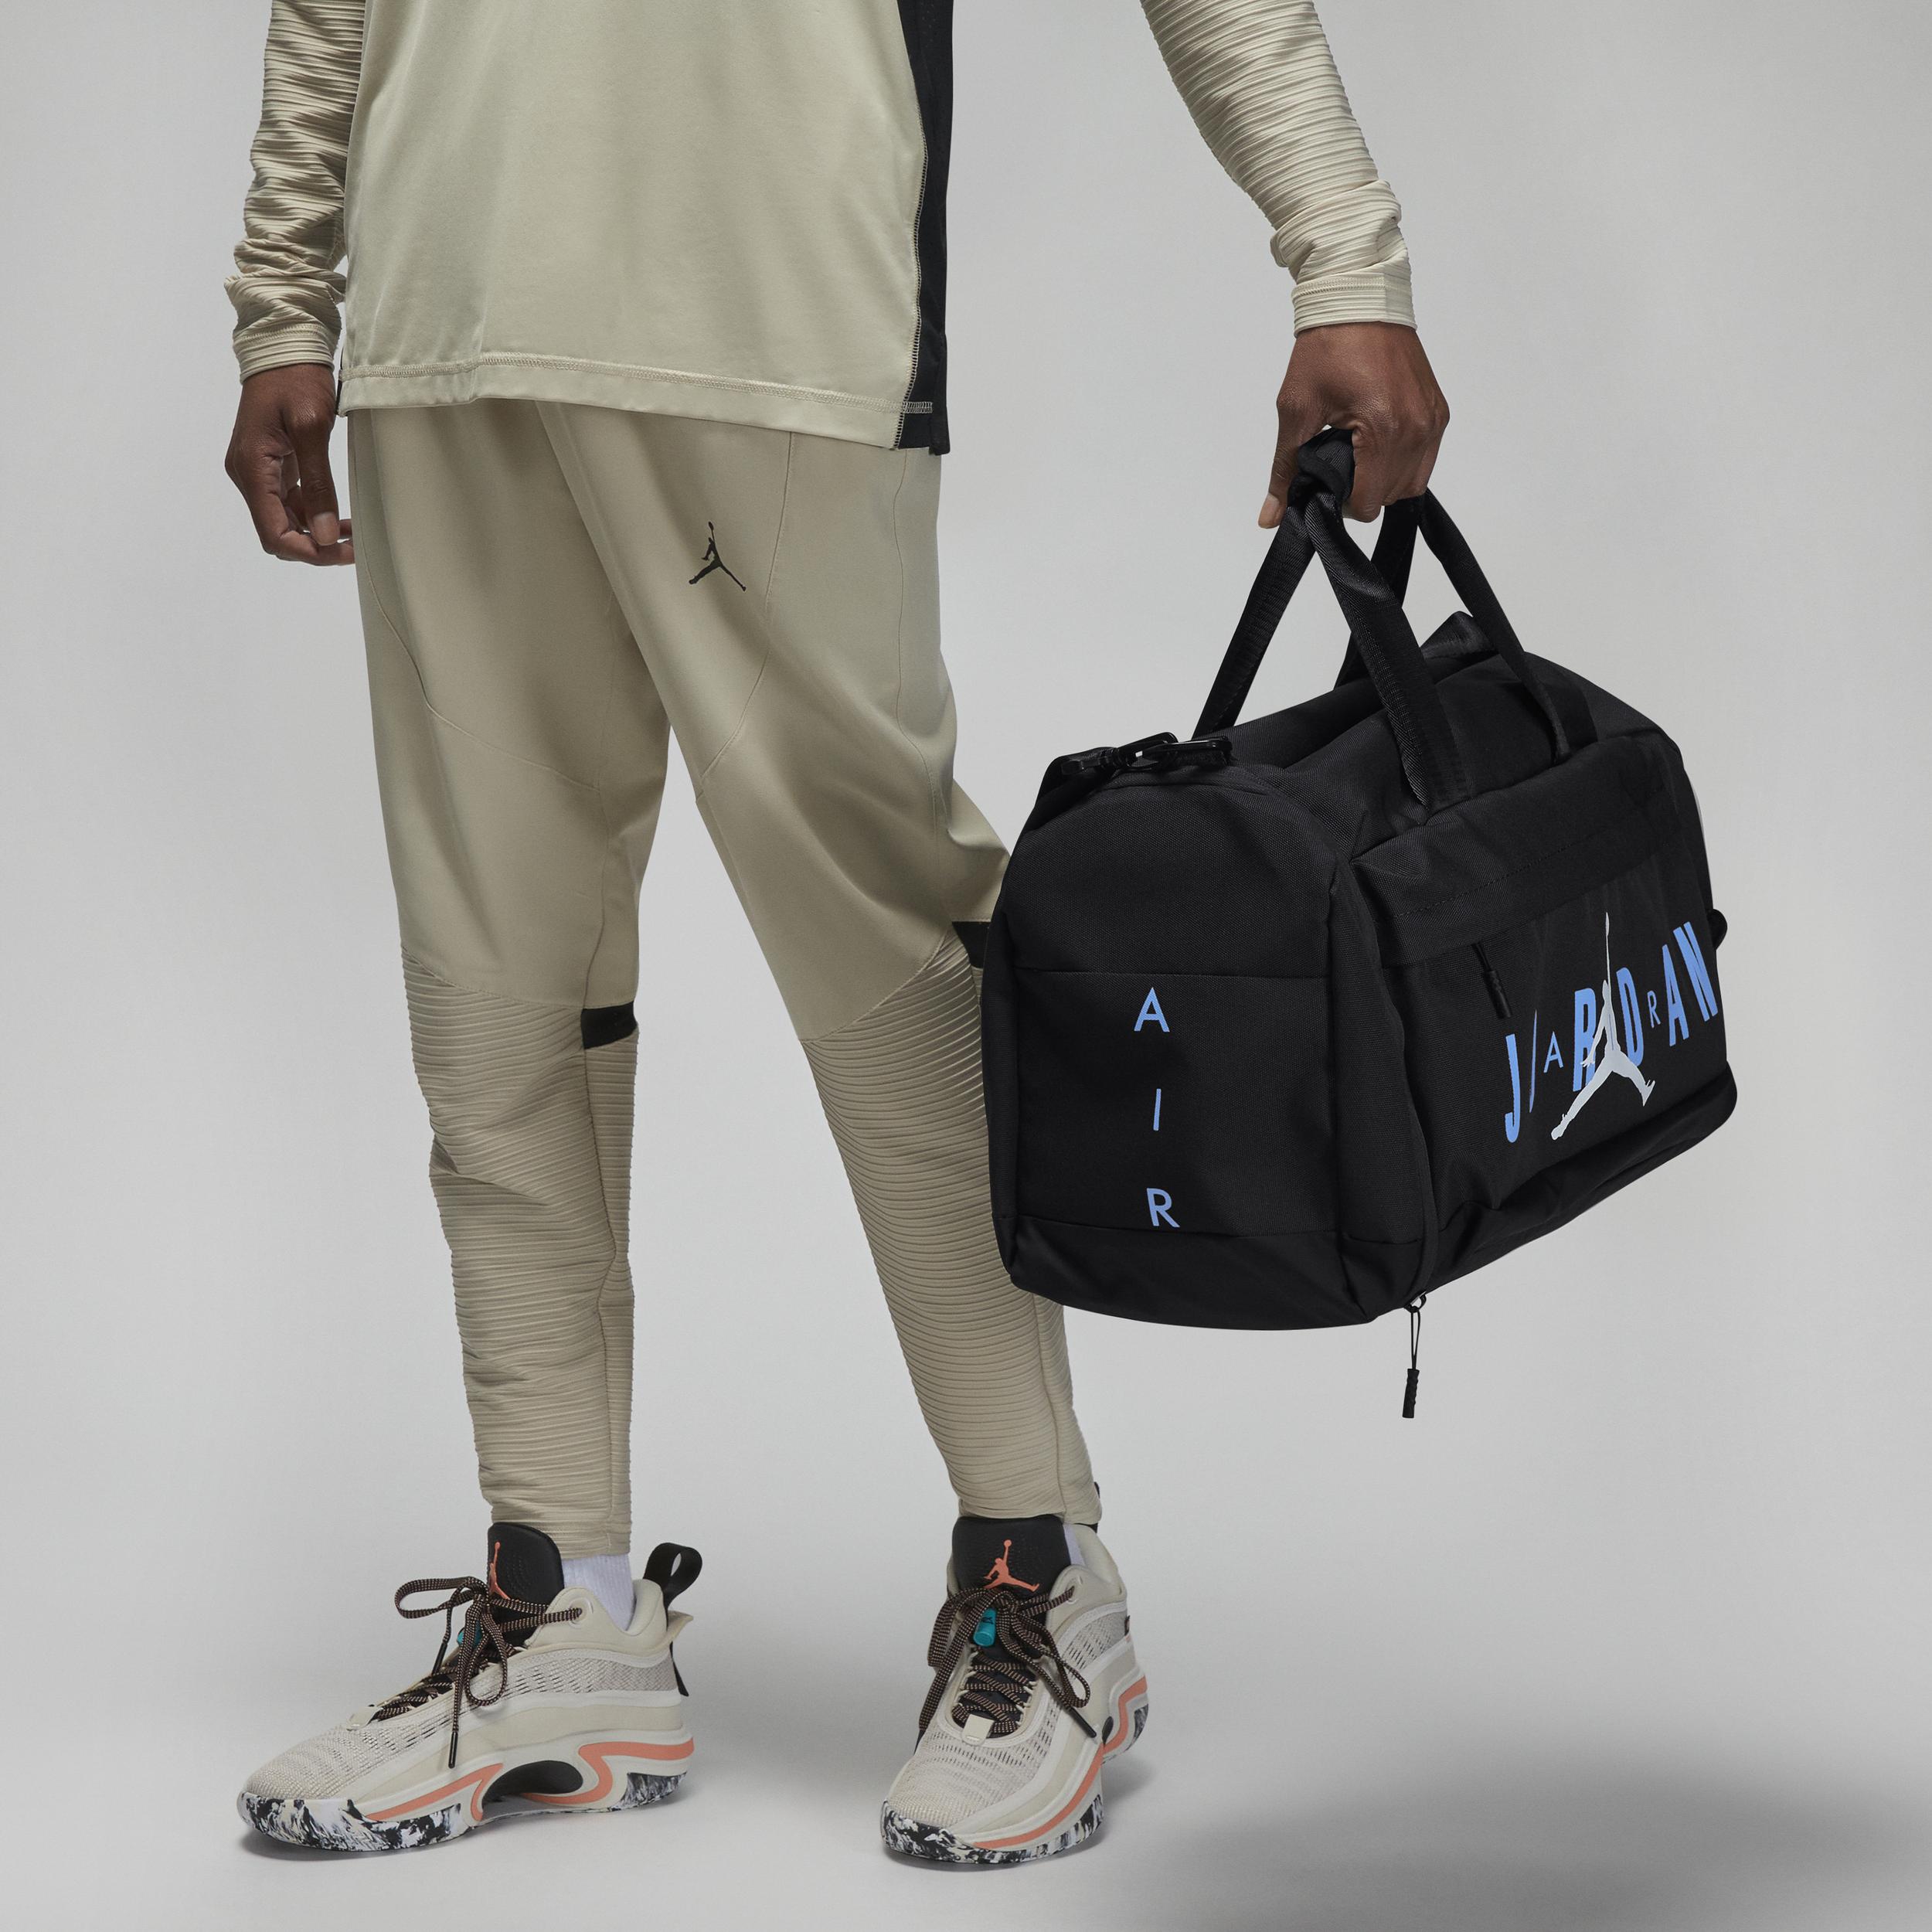 Serena Williams Design Crew Duffel Bag (35L).